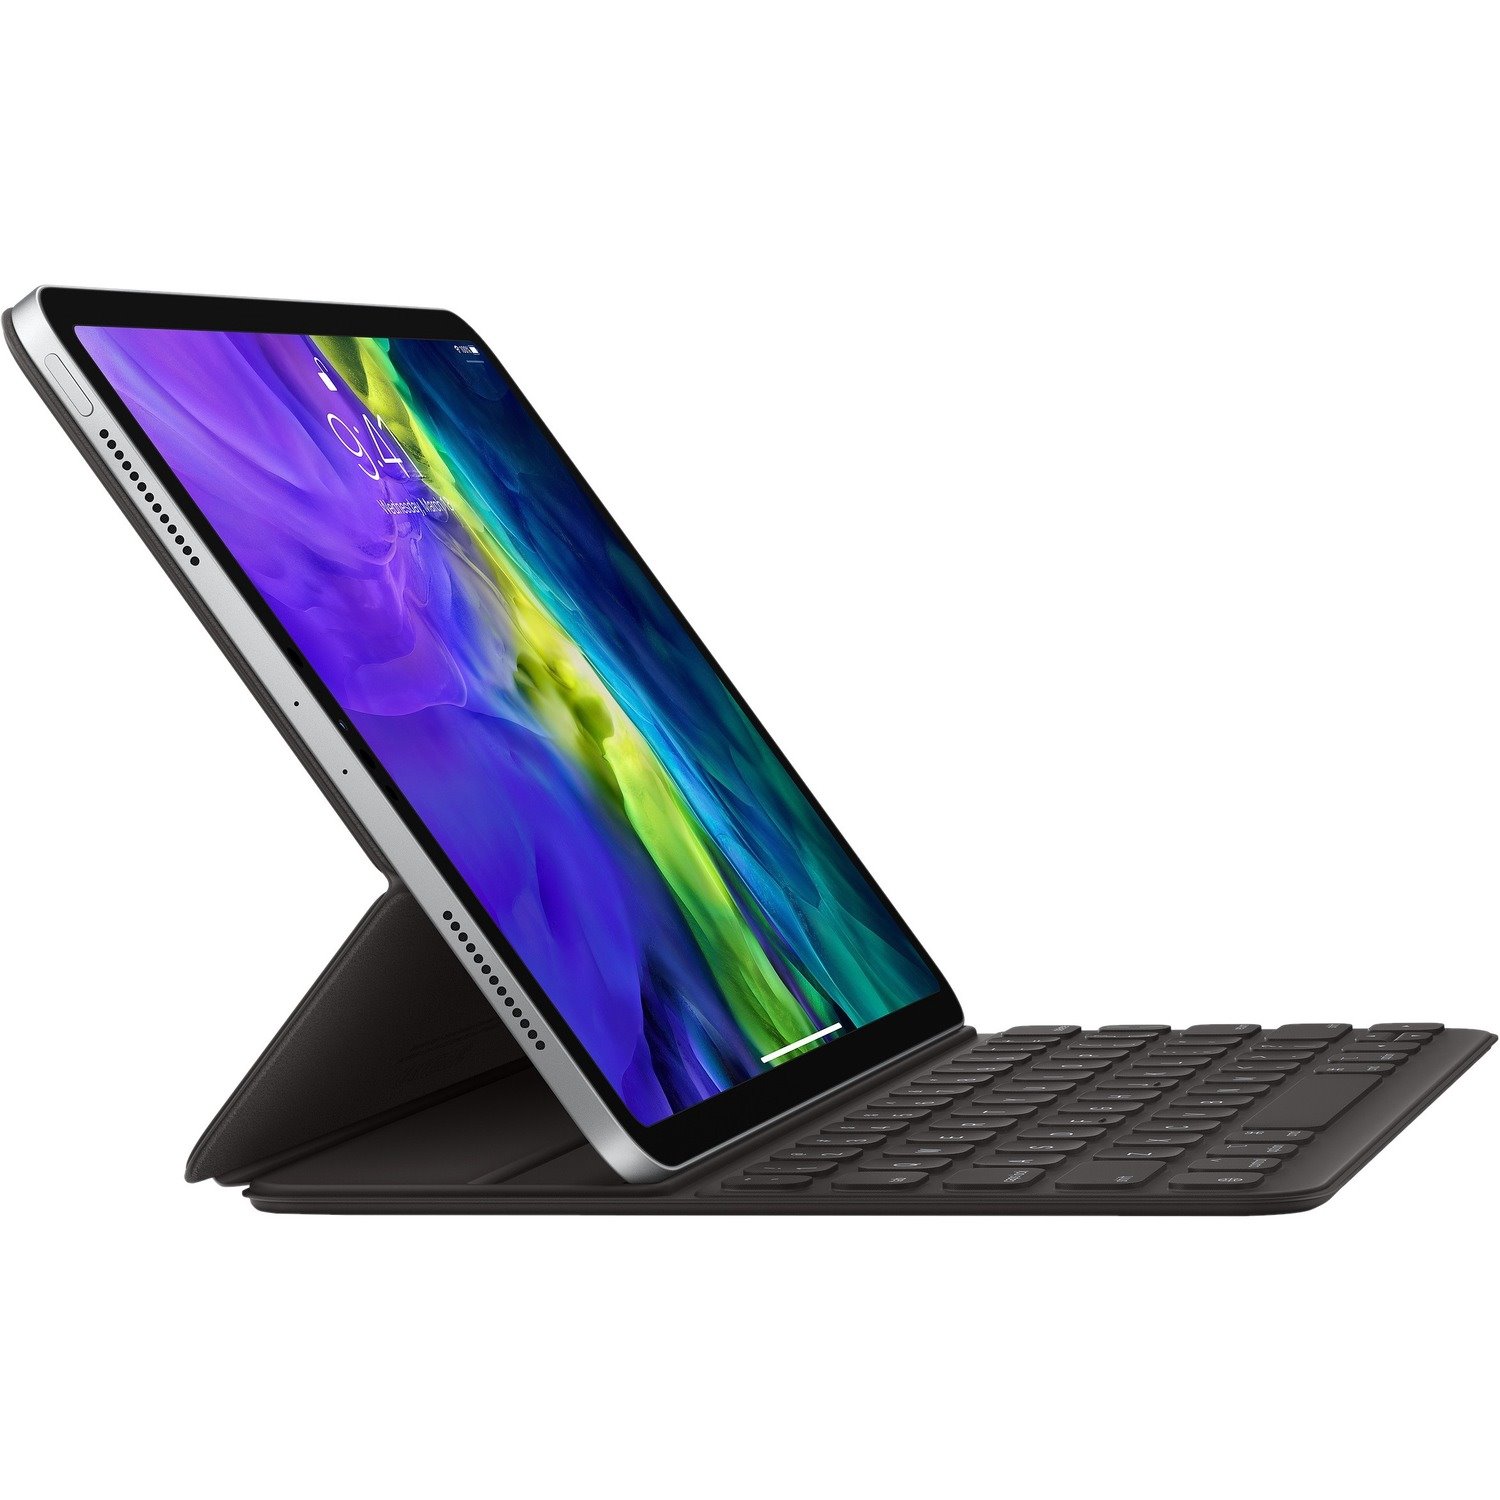 Apple Smart Keyboard Folio Keyboard/Cover Case (Folio) for 27.9 cm (11") Apple iPad Pro (2nd Generation), iPad Pro, iPad Air (4th Generation) Tablet